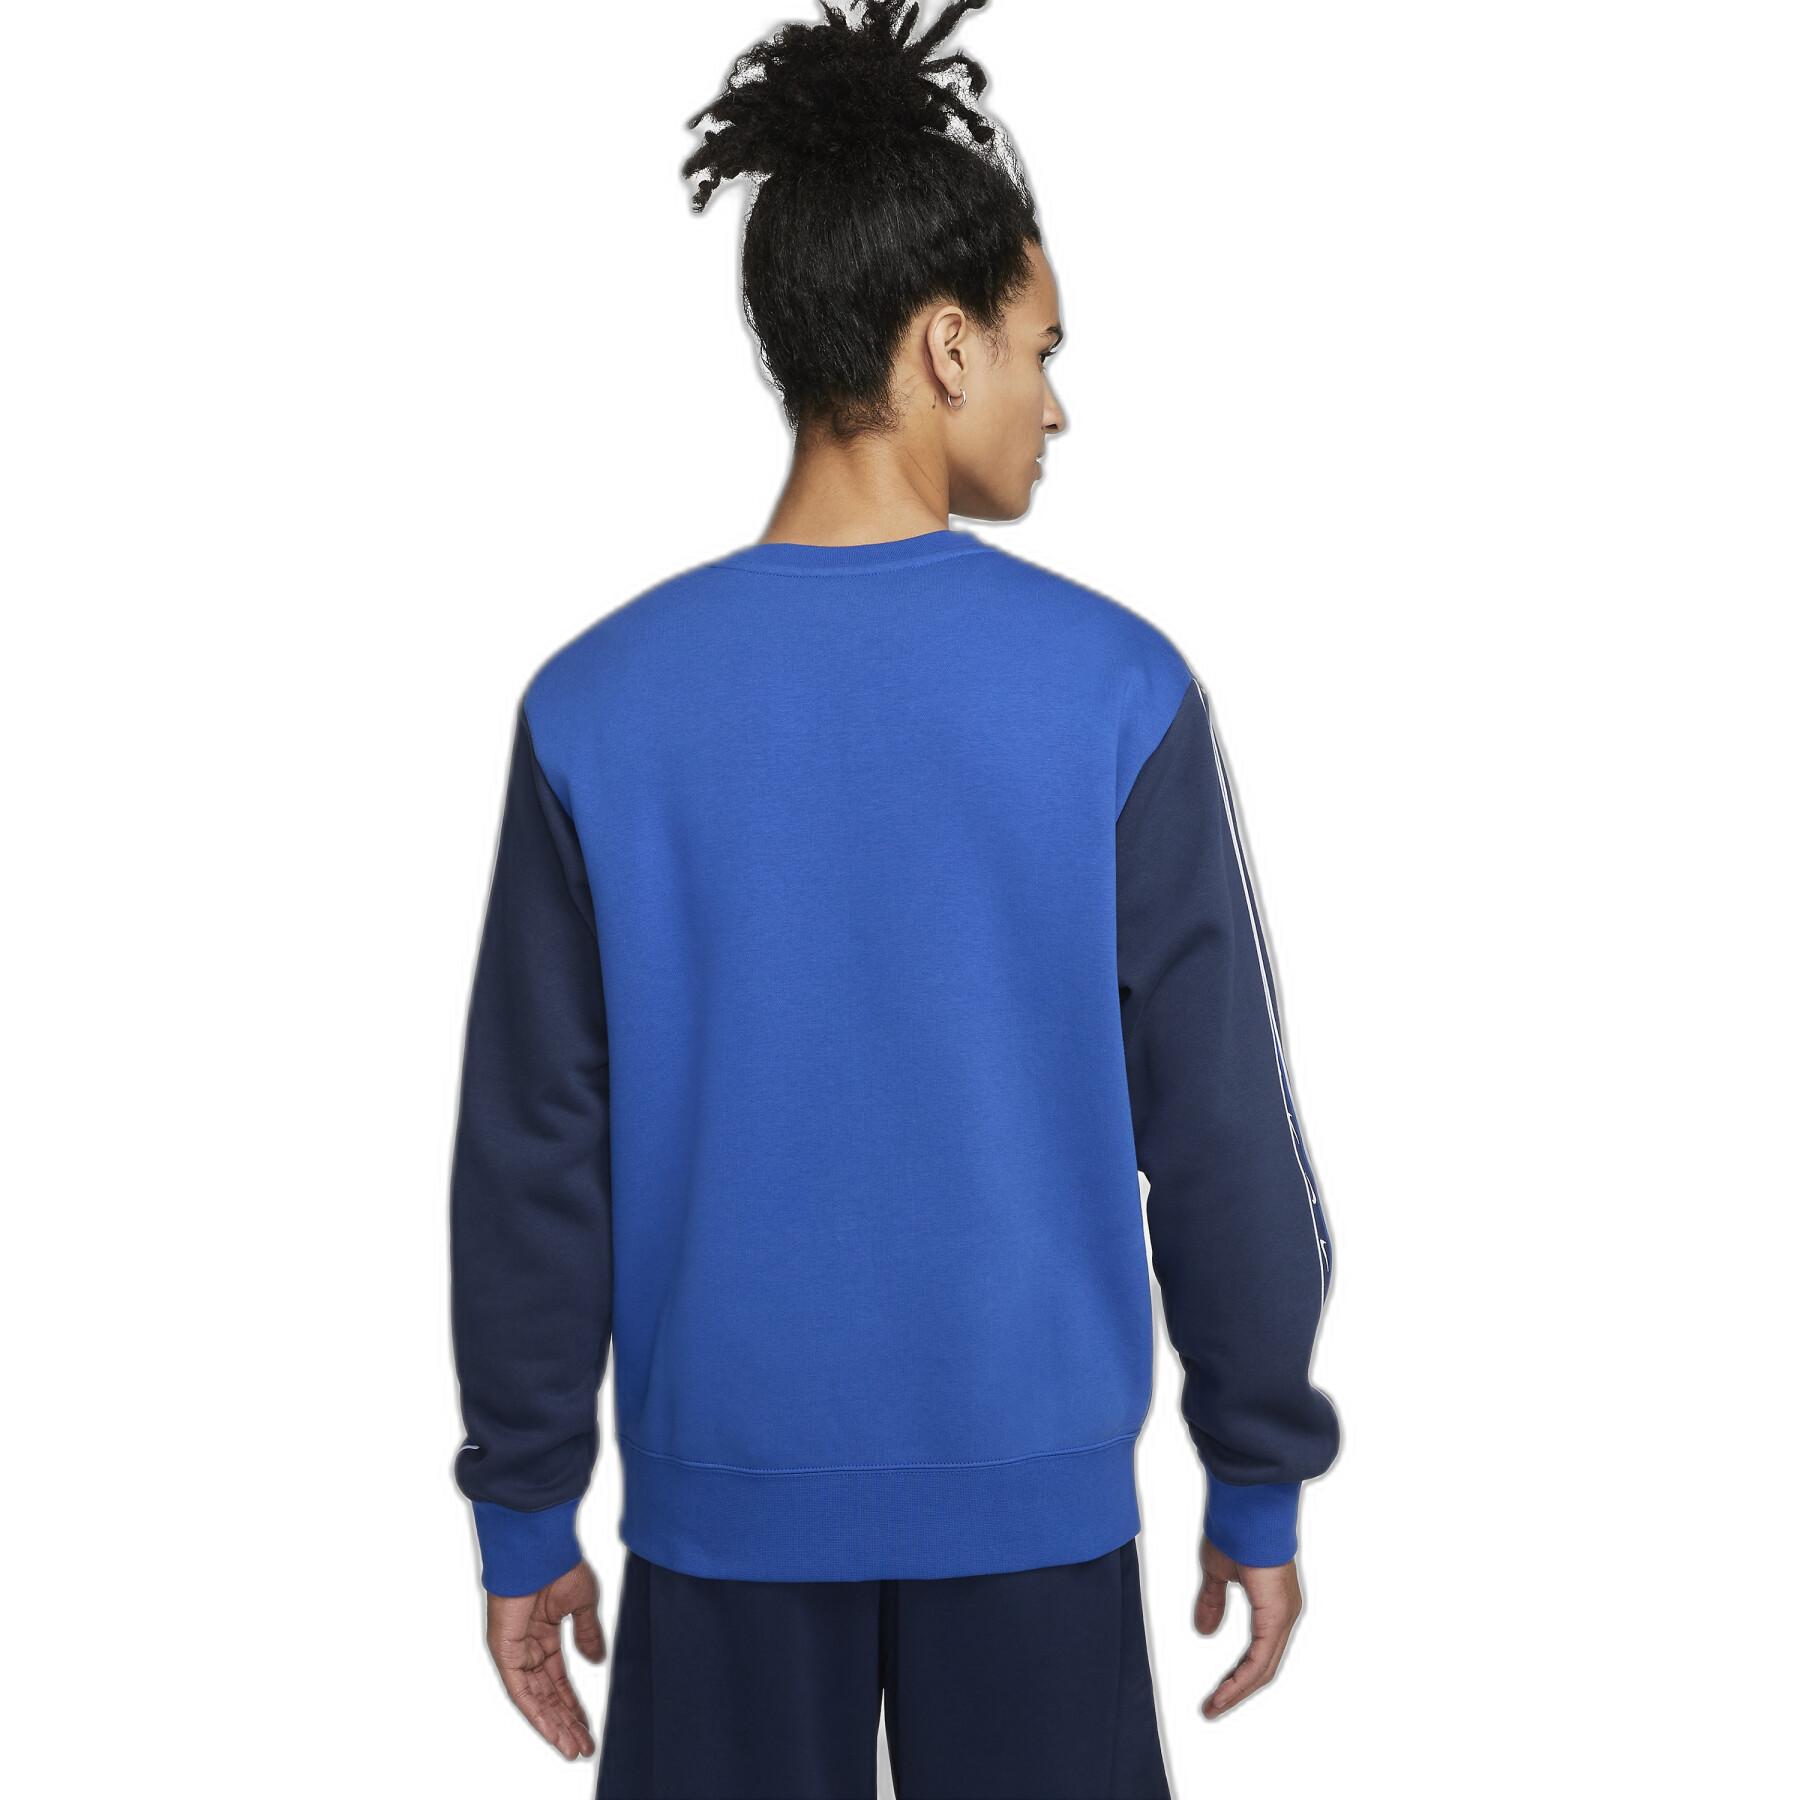 Sweatshirt pescoço redondo Nike Repeat BB